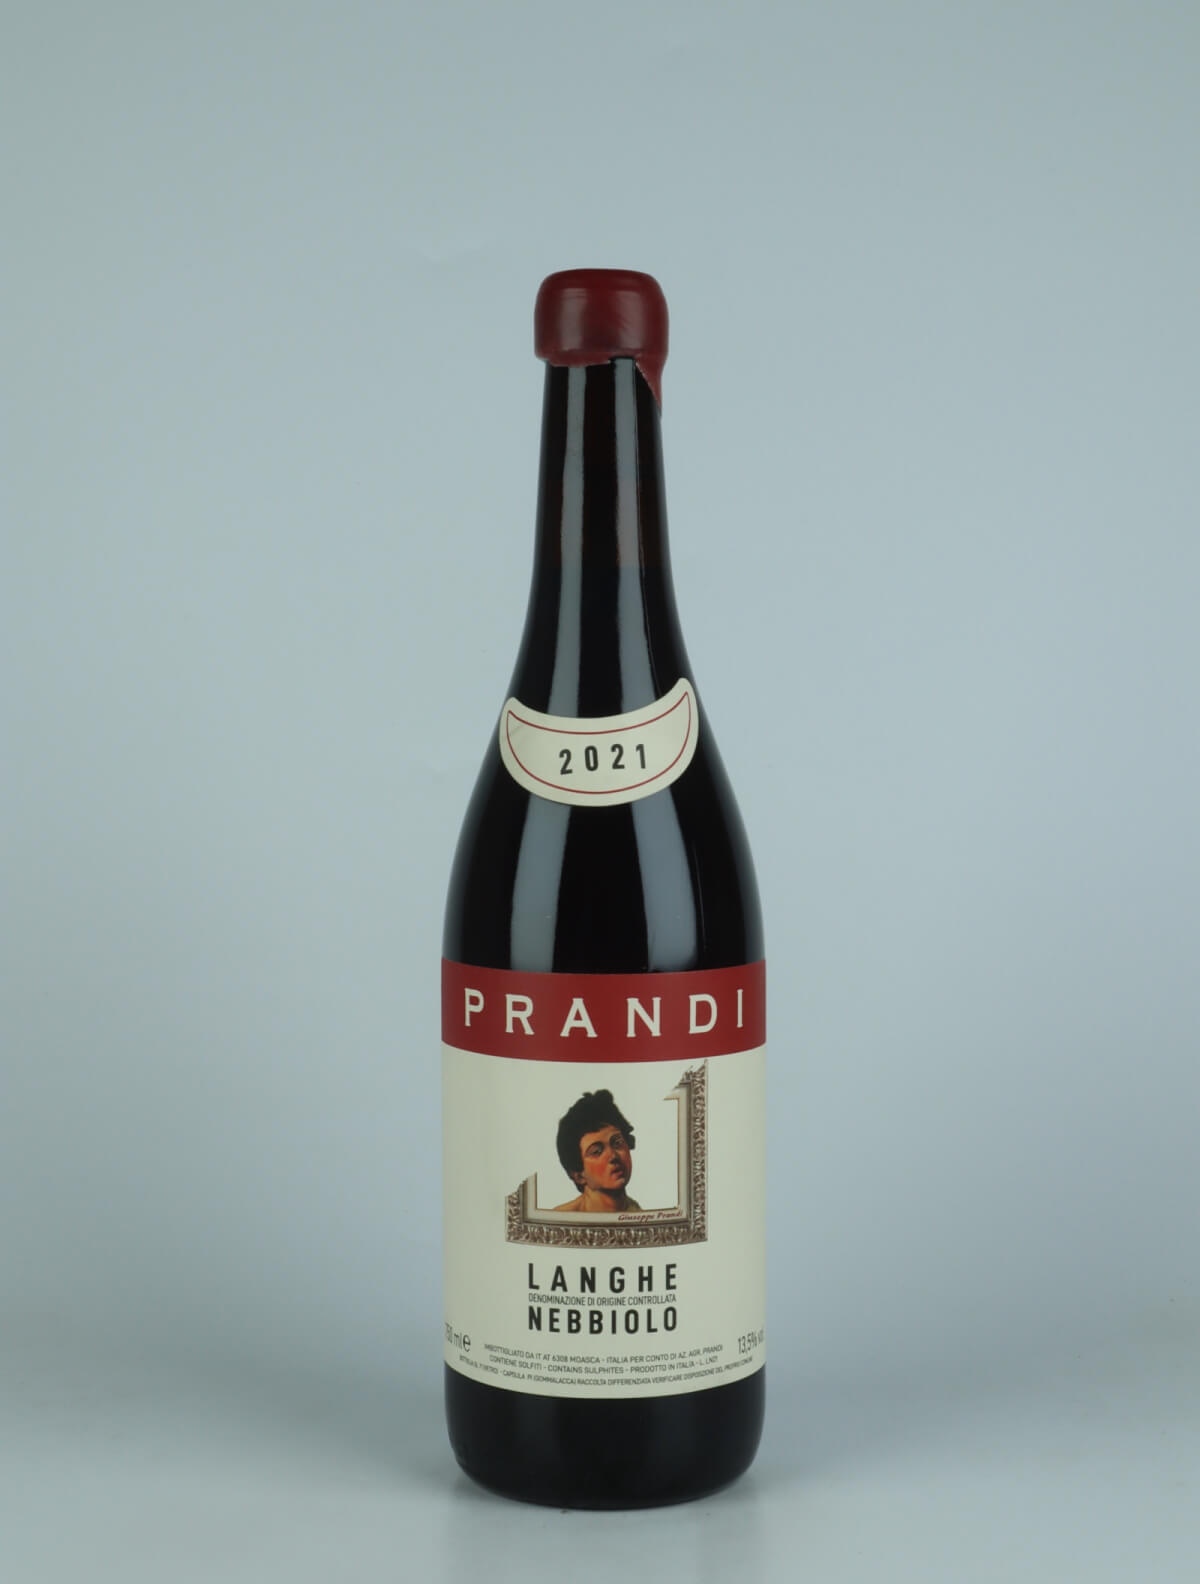 A bottle 2021 Langhe Nebbiolo - Giuseppe Prandi Red wine from Cristina Prandi, Piedmont in Italy